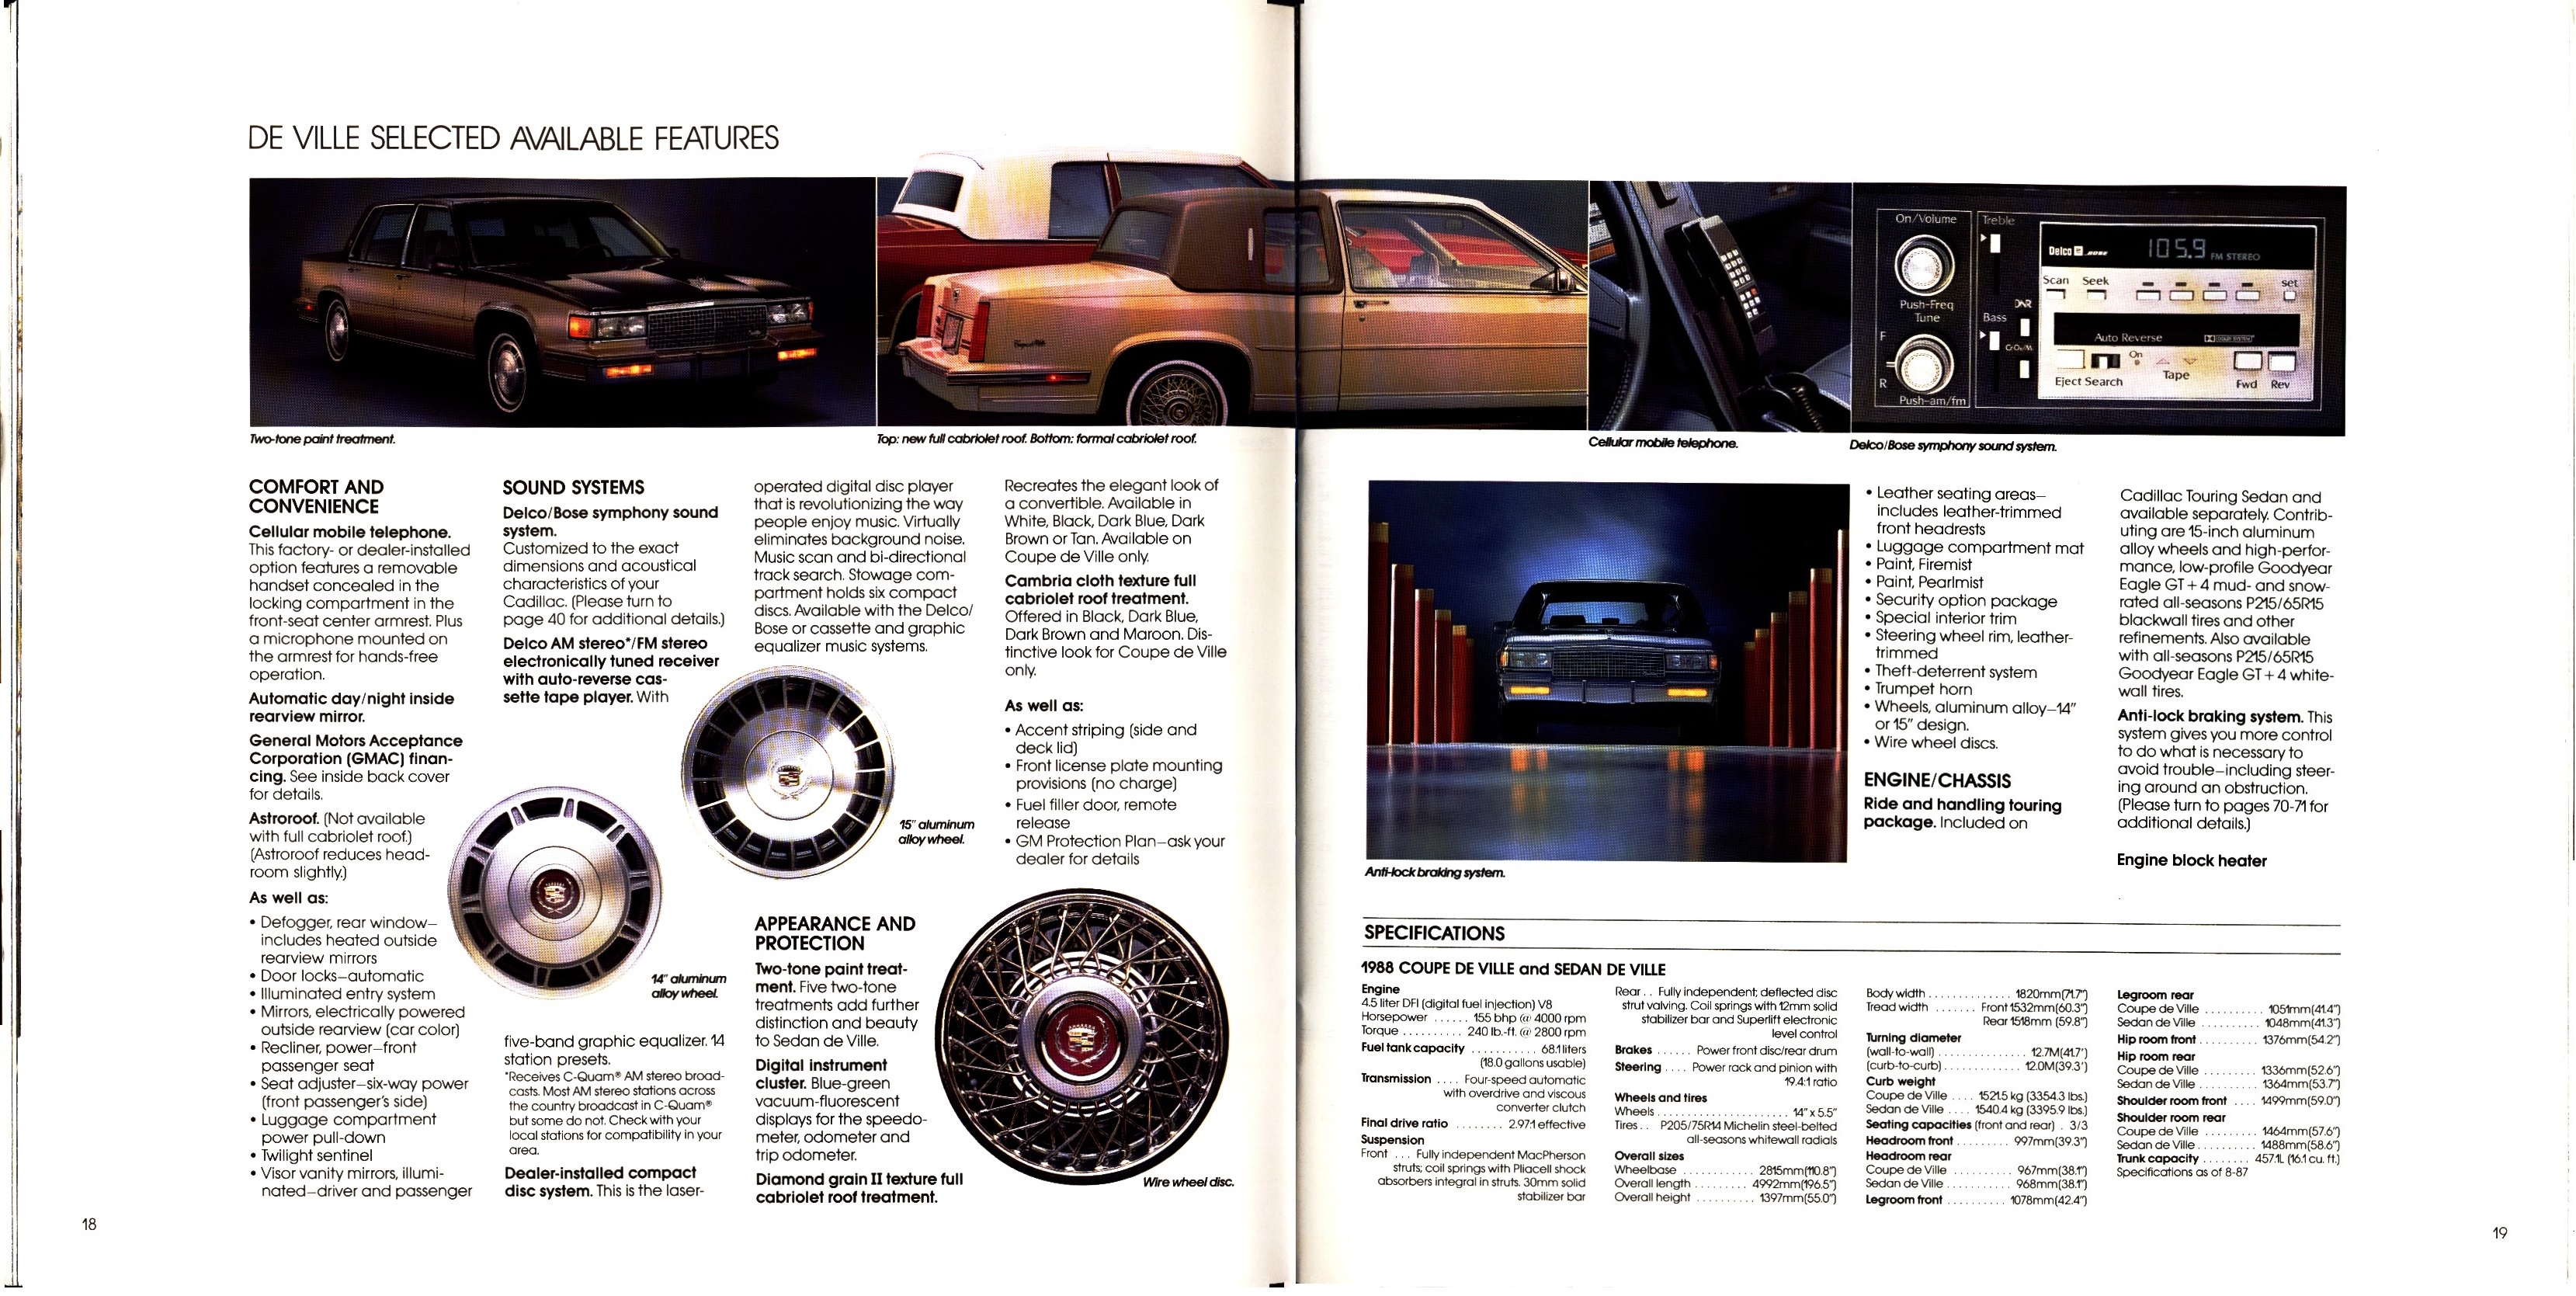 1988 Cadillac Full Line Prestige Brochure 18-19